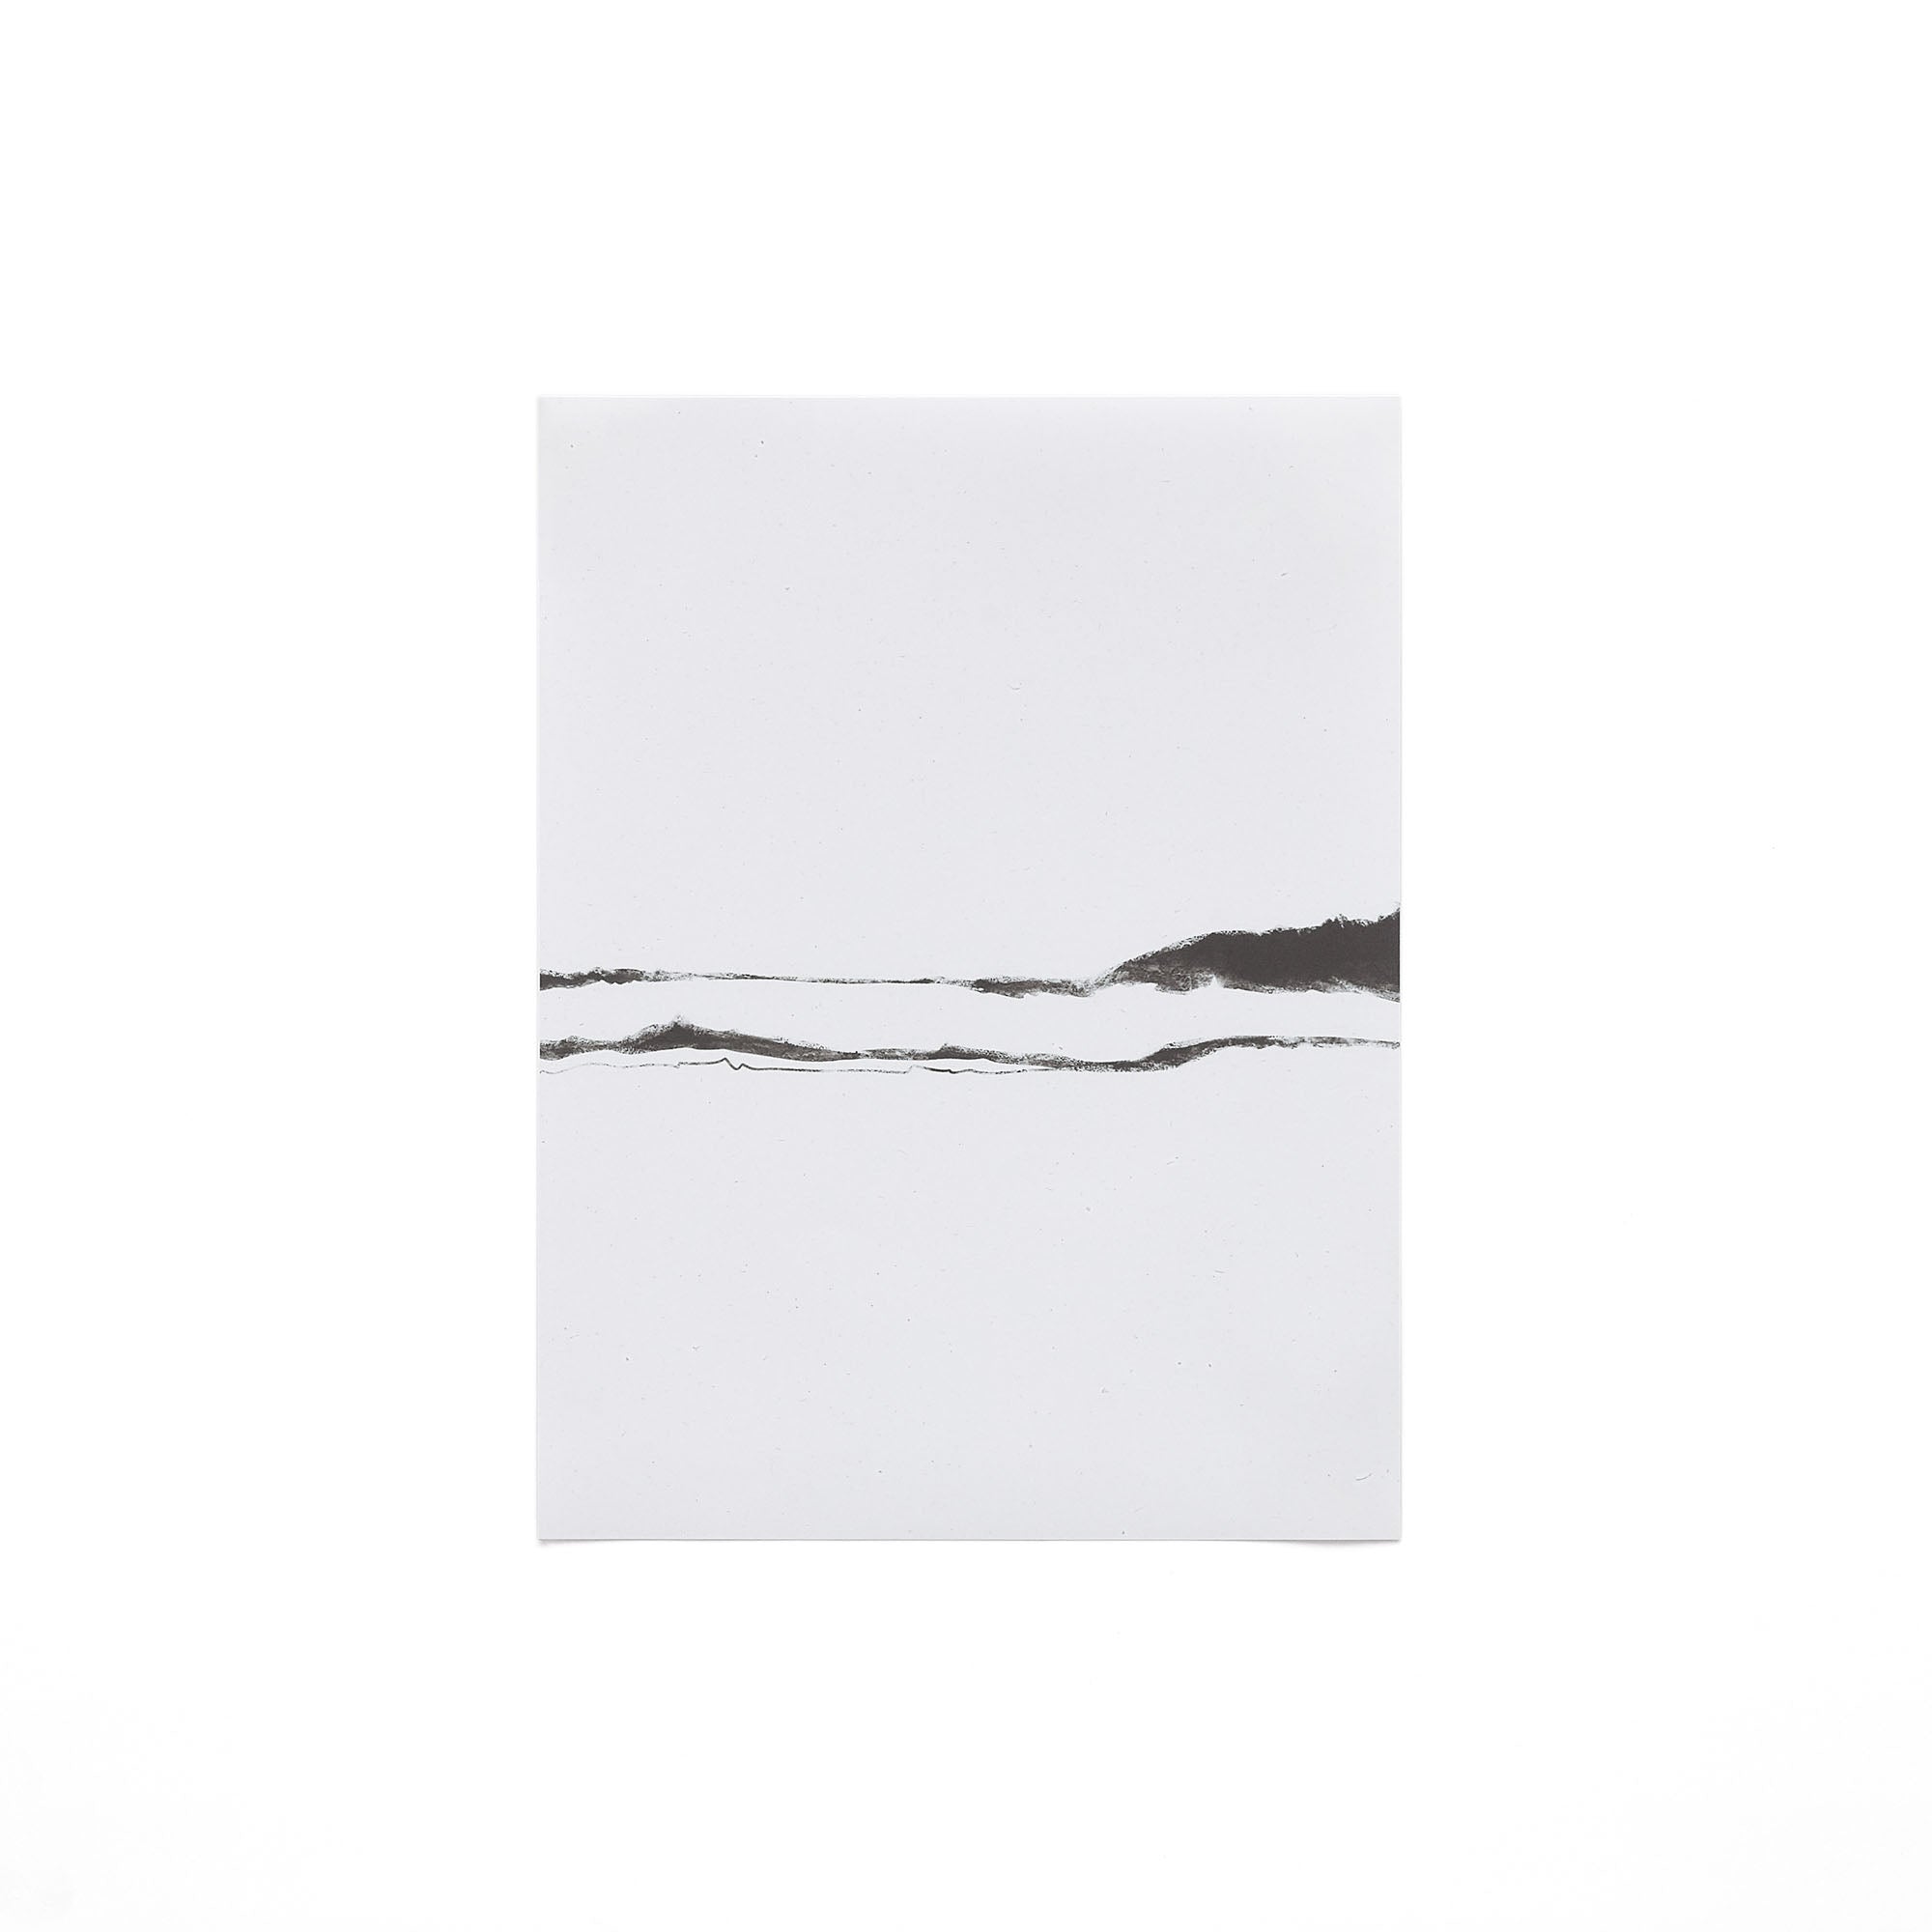 Istan white paper print, 21 x 28 cm